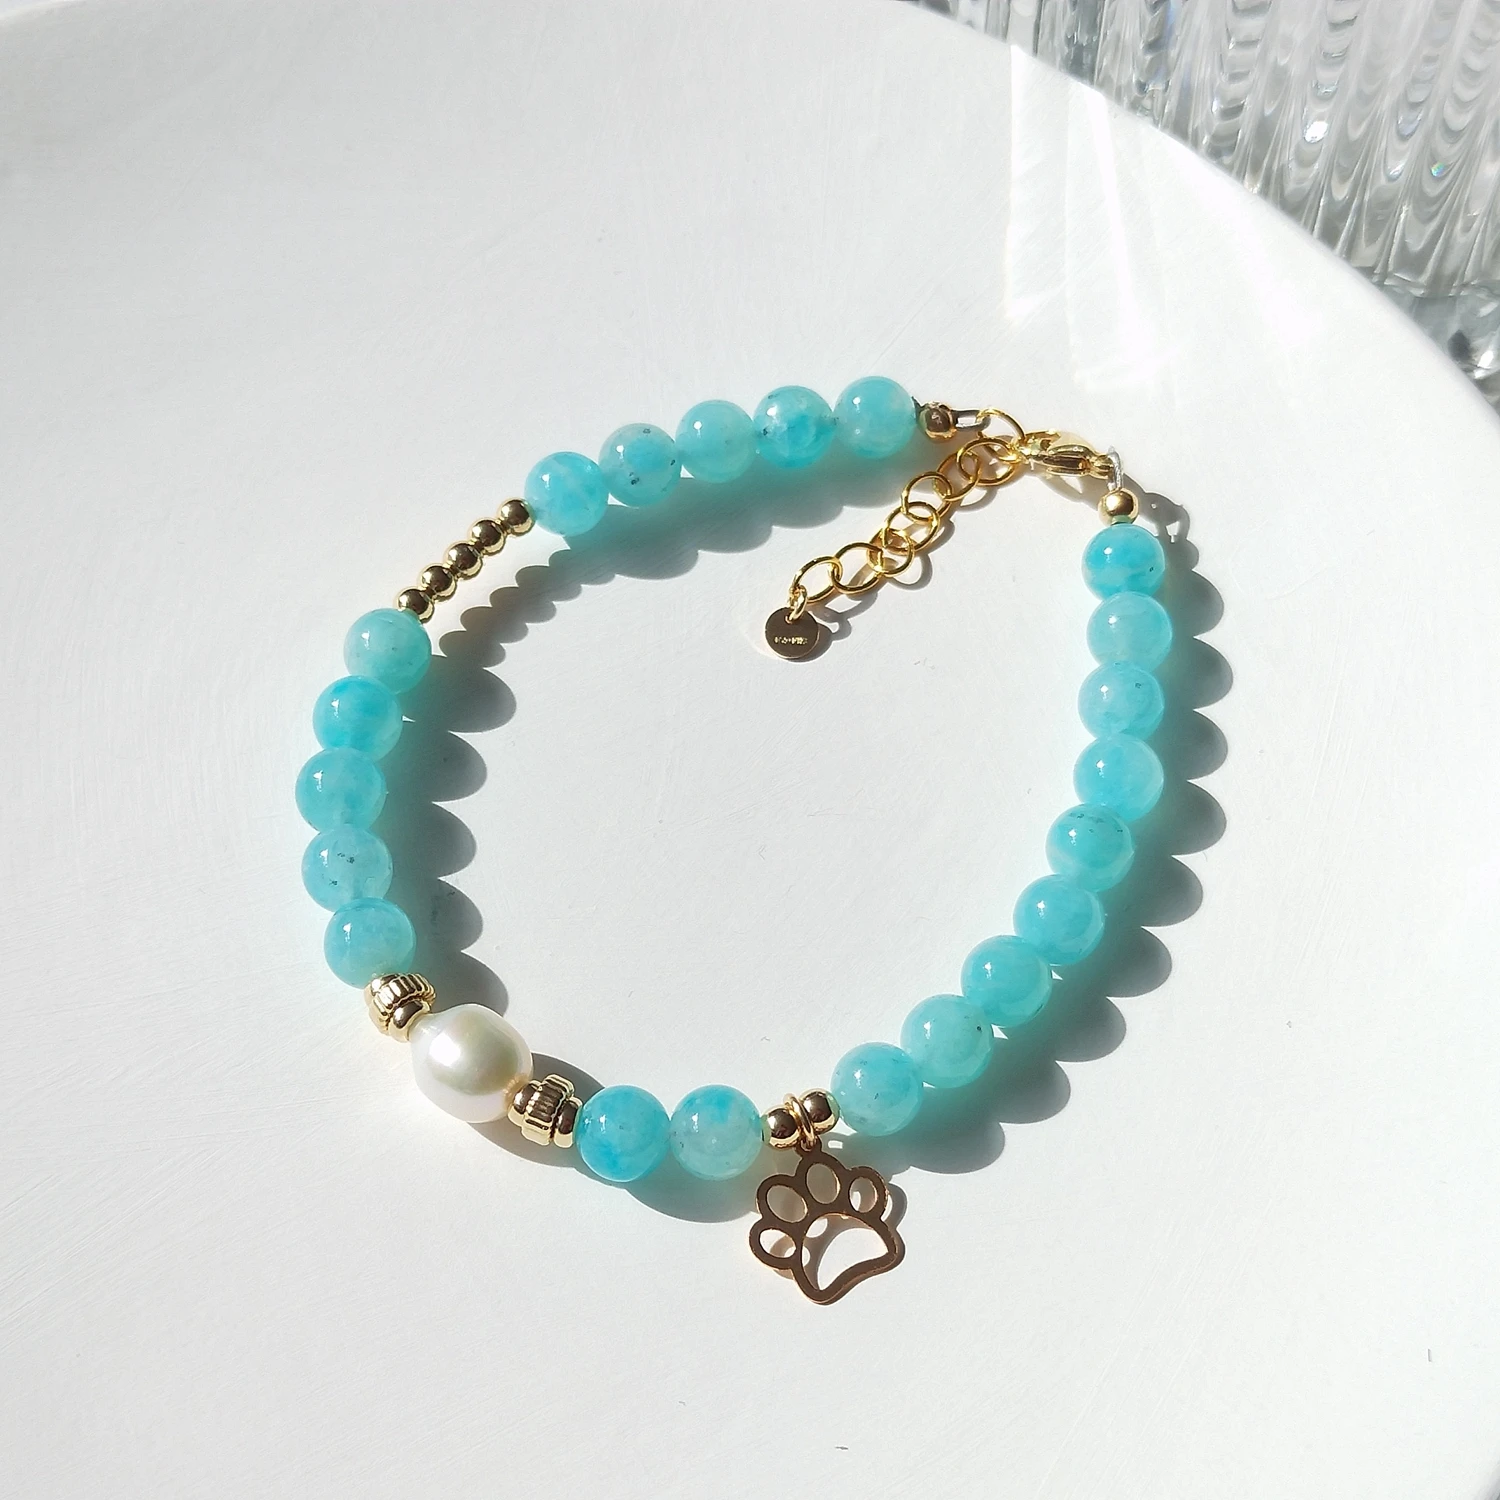 Lii Ji Amazonite Natural Stone 14K Gold Filled Adjustable Bracelet Gold Luxurious Fashion Jewelry For Women Girls Gift 5